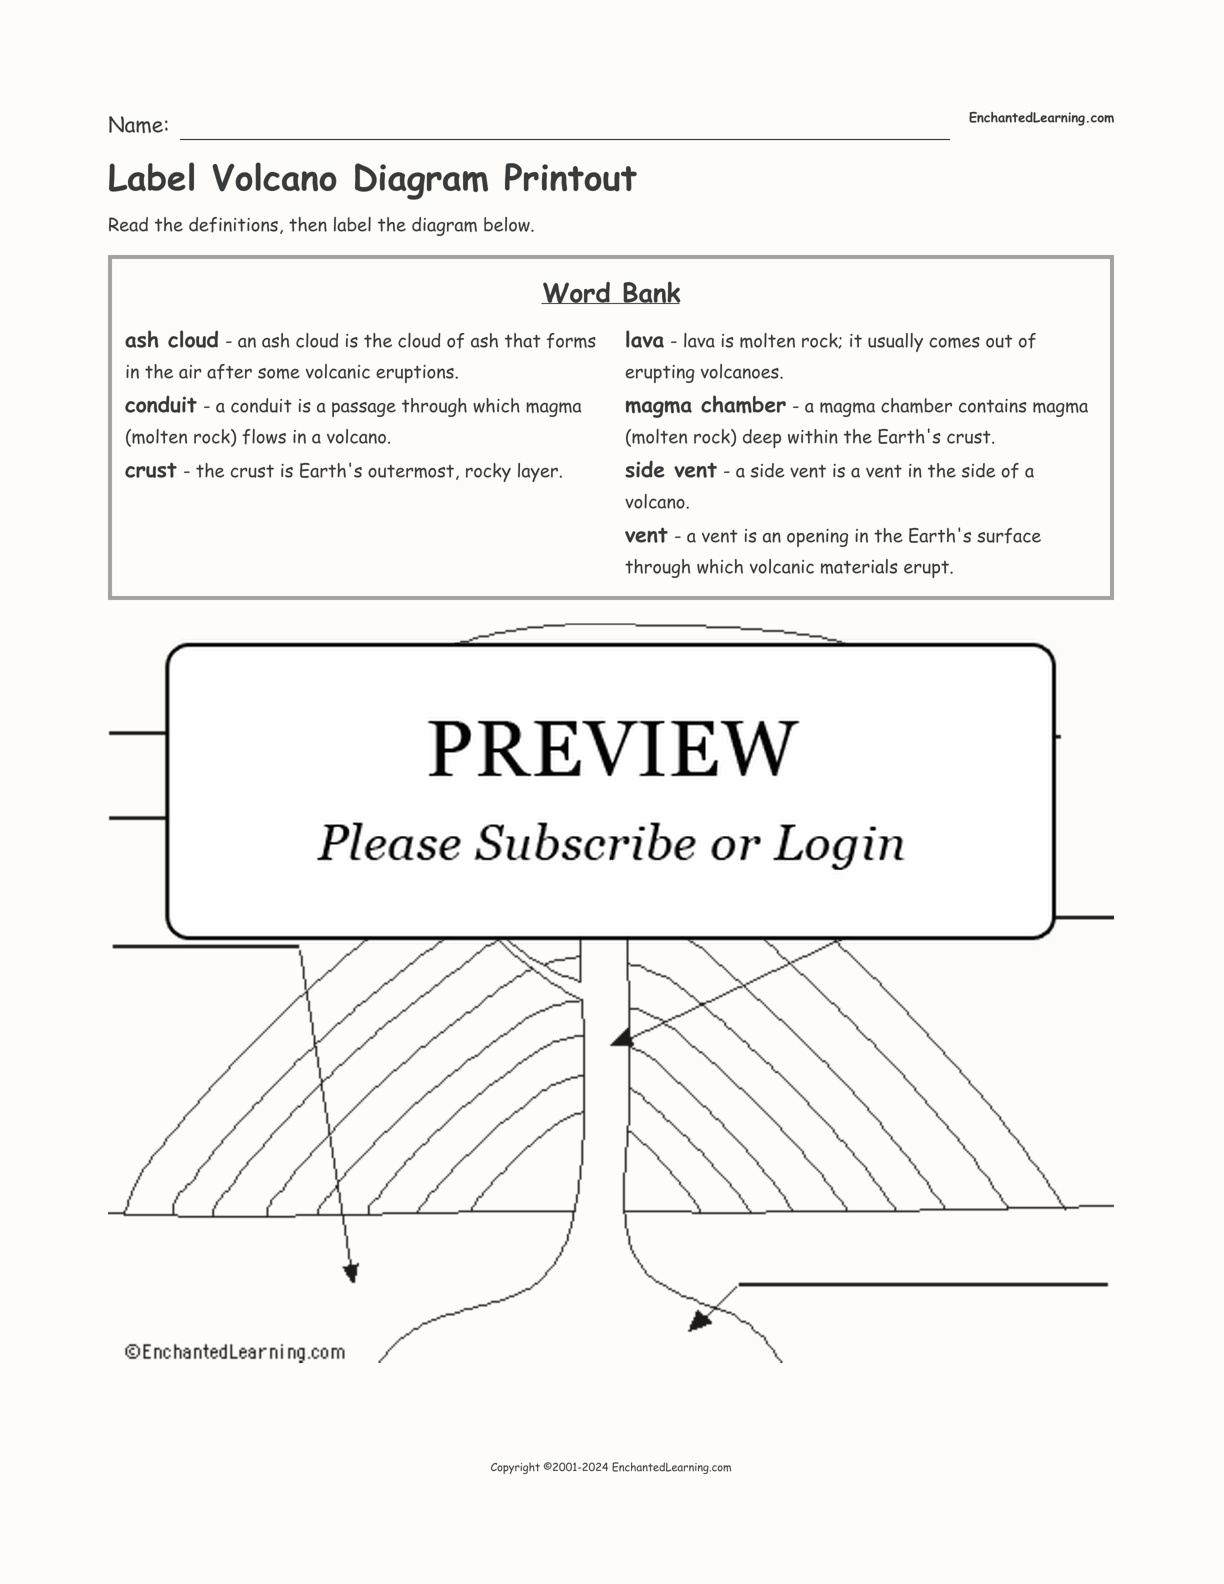 Label Volcano Diagram Printout interactive worksheet page 1